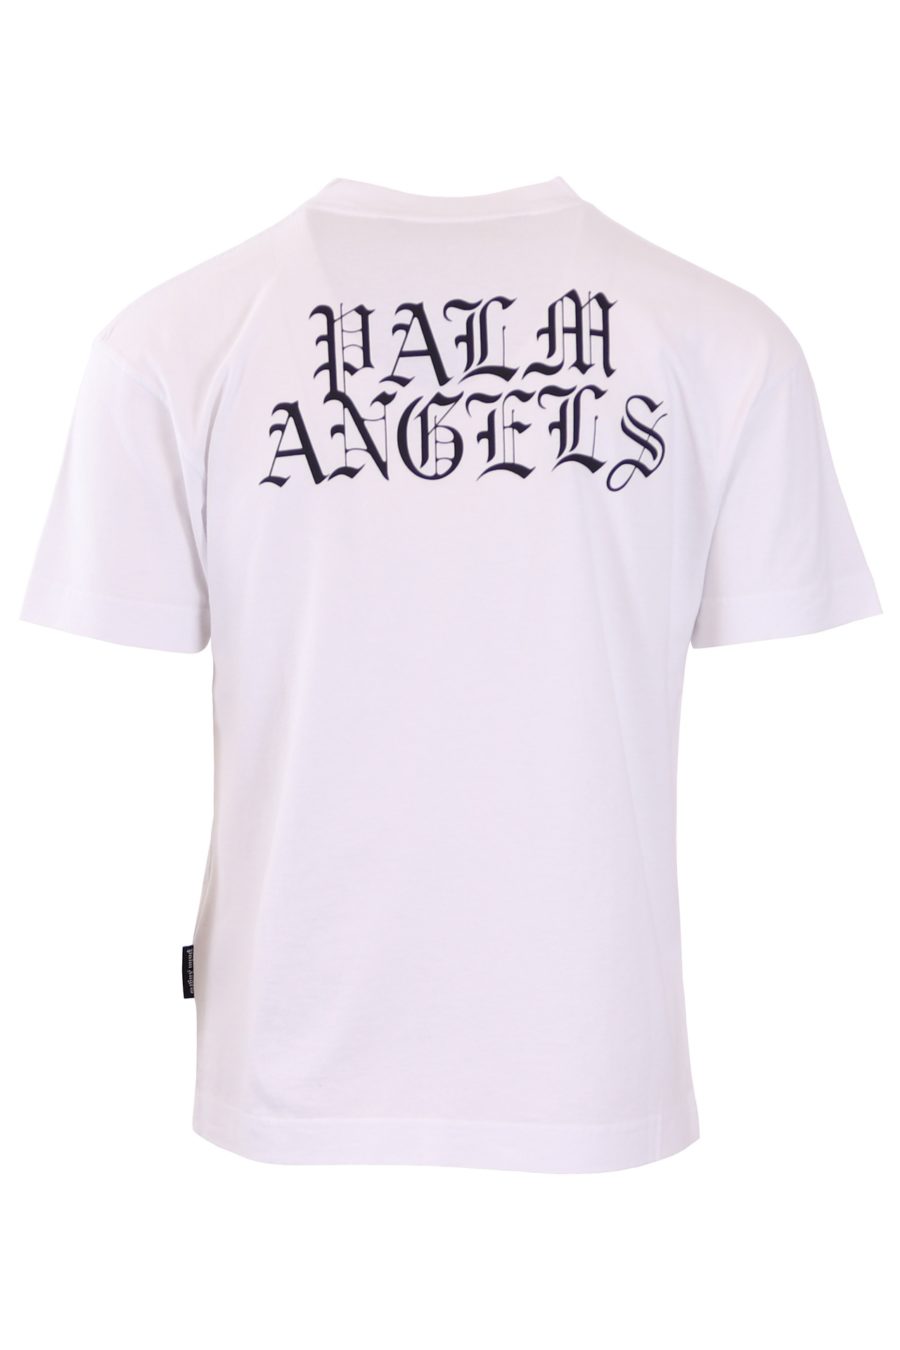 Camiseta Palm Angels blanca con logo sol - 5e4f6cdafbbc406d0549d73b1cf76f84994080ae